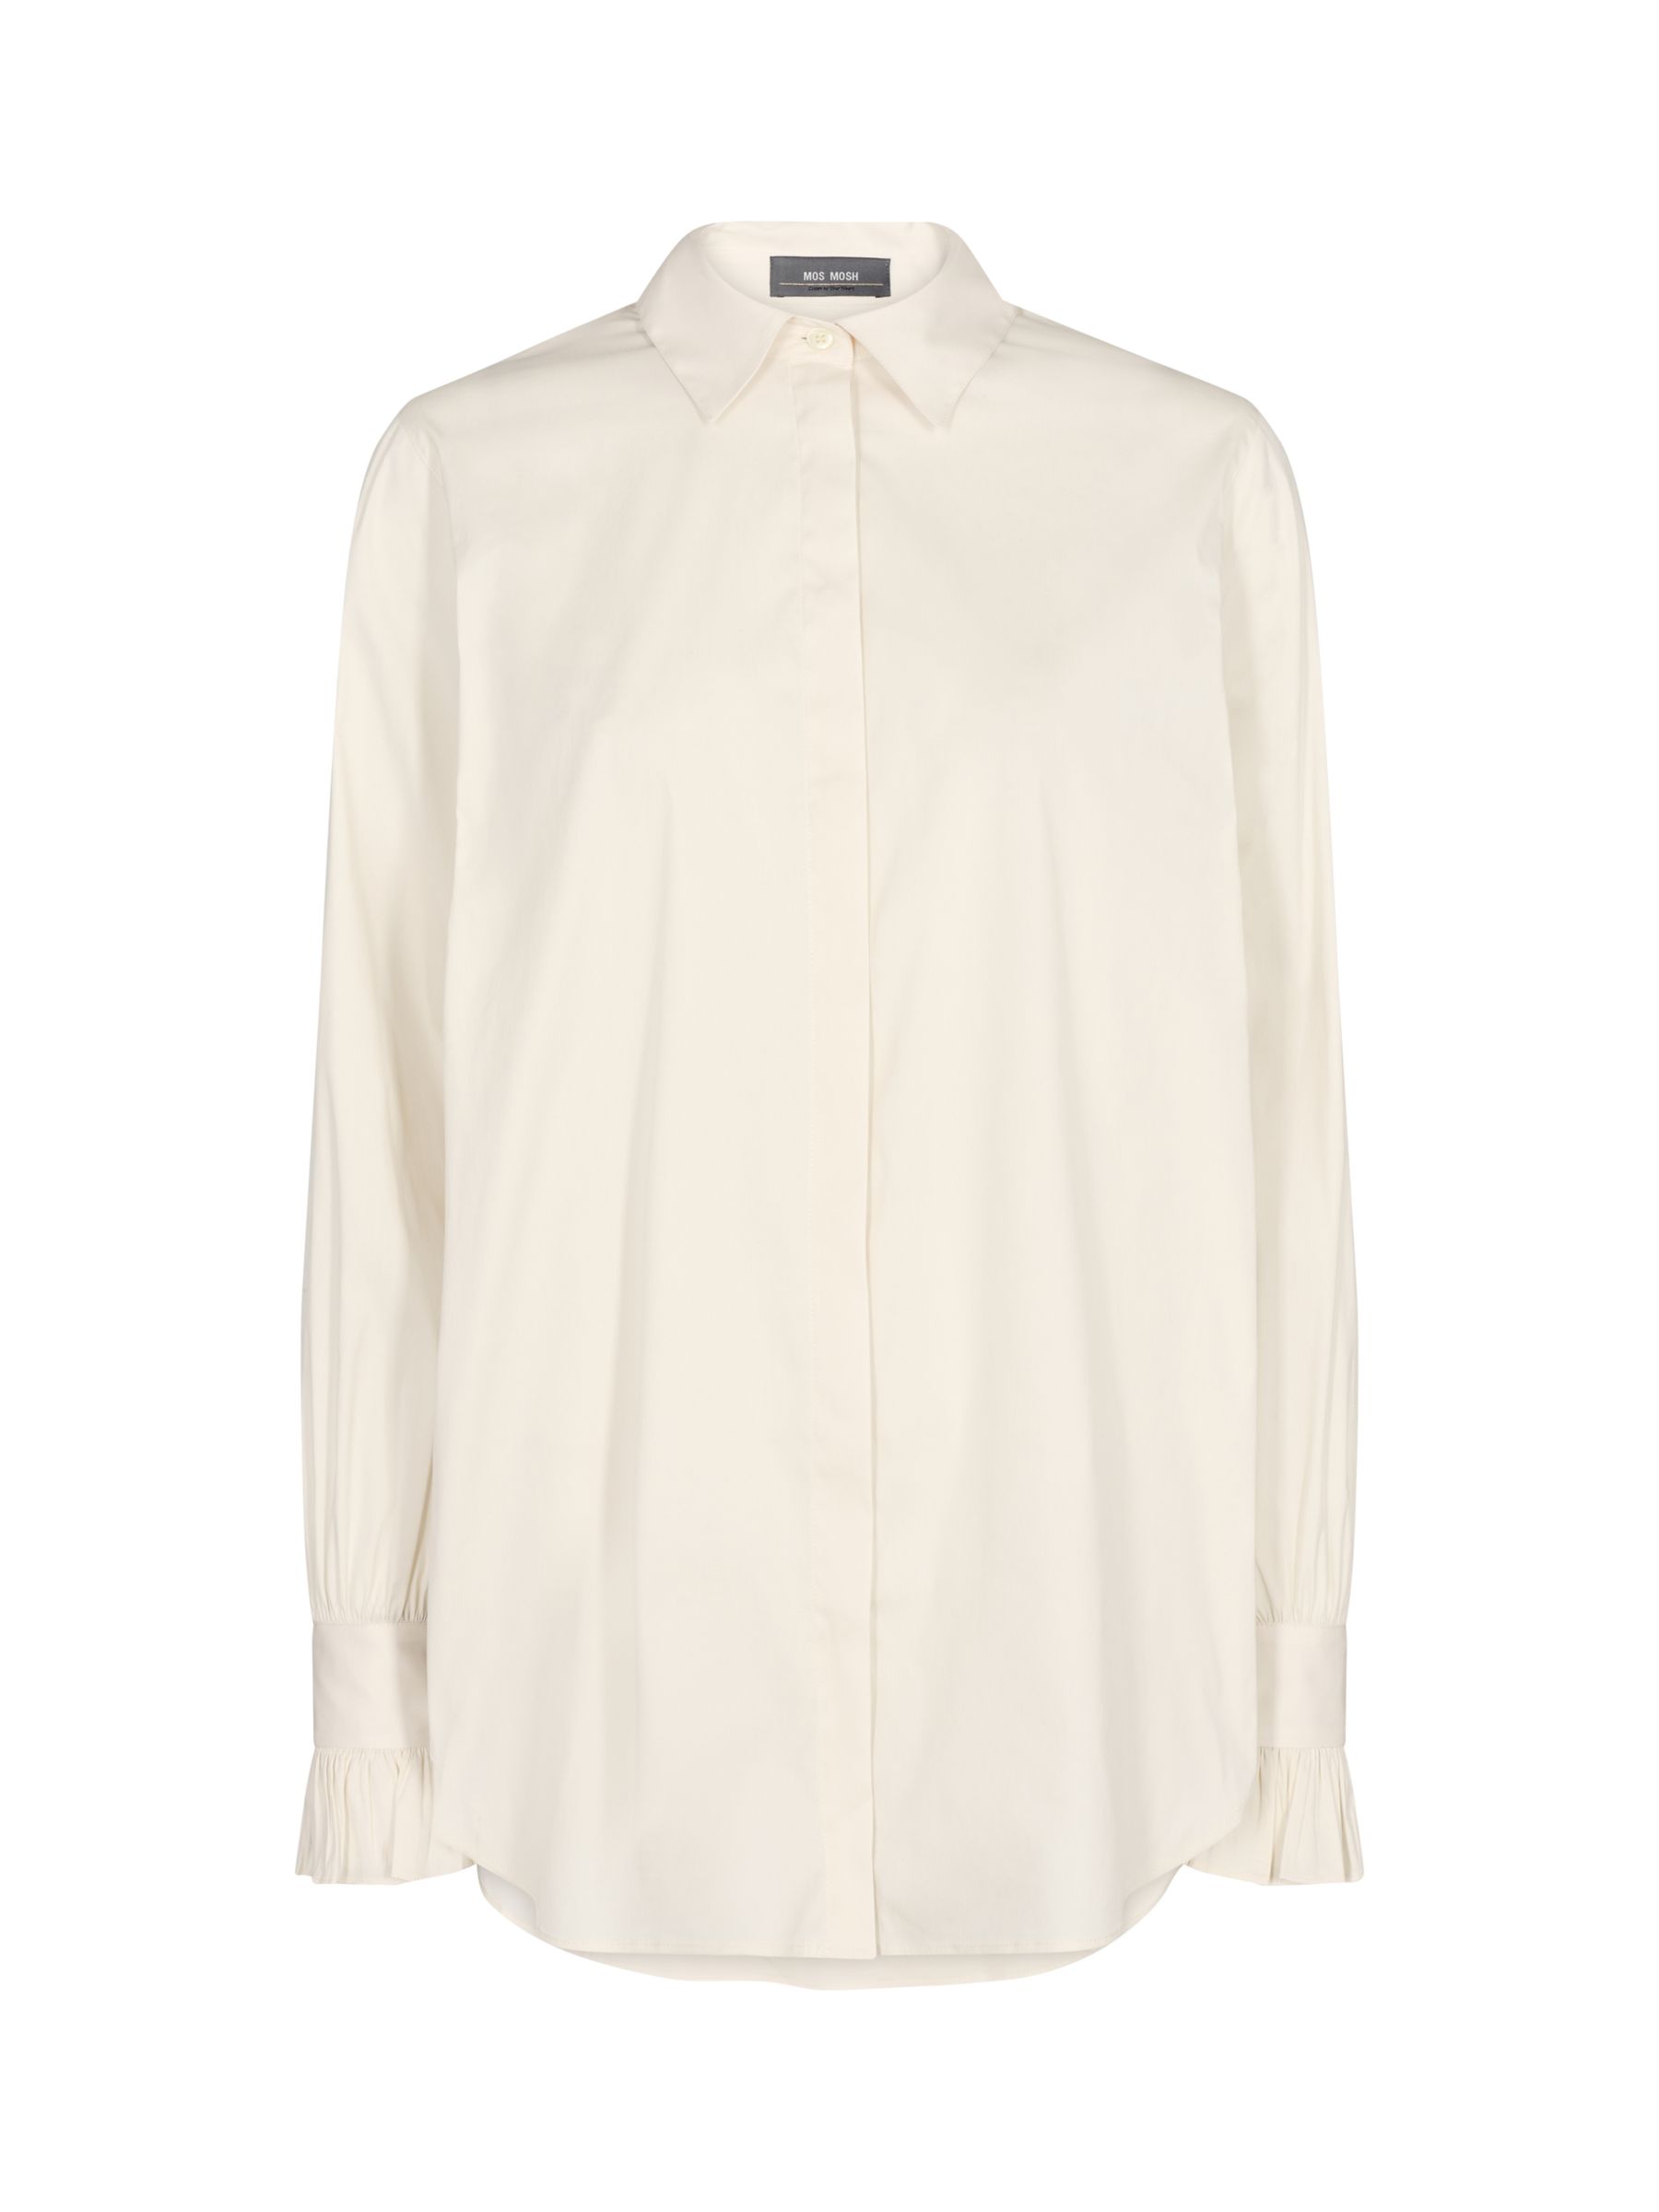 MOS MOSH Enola Cotton Blend Ruffle Shirt, Ecru at John Lewis & Partners